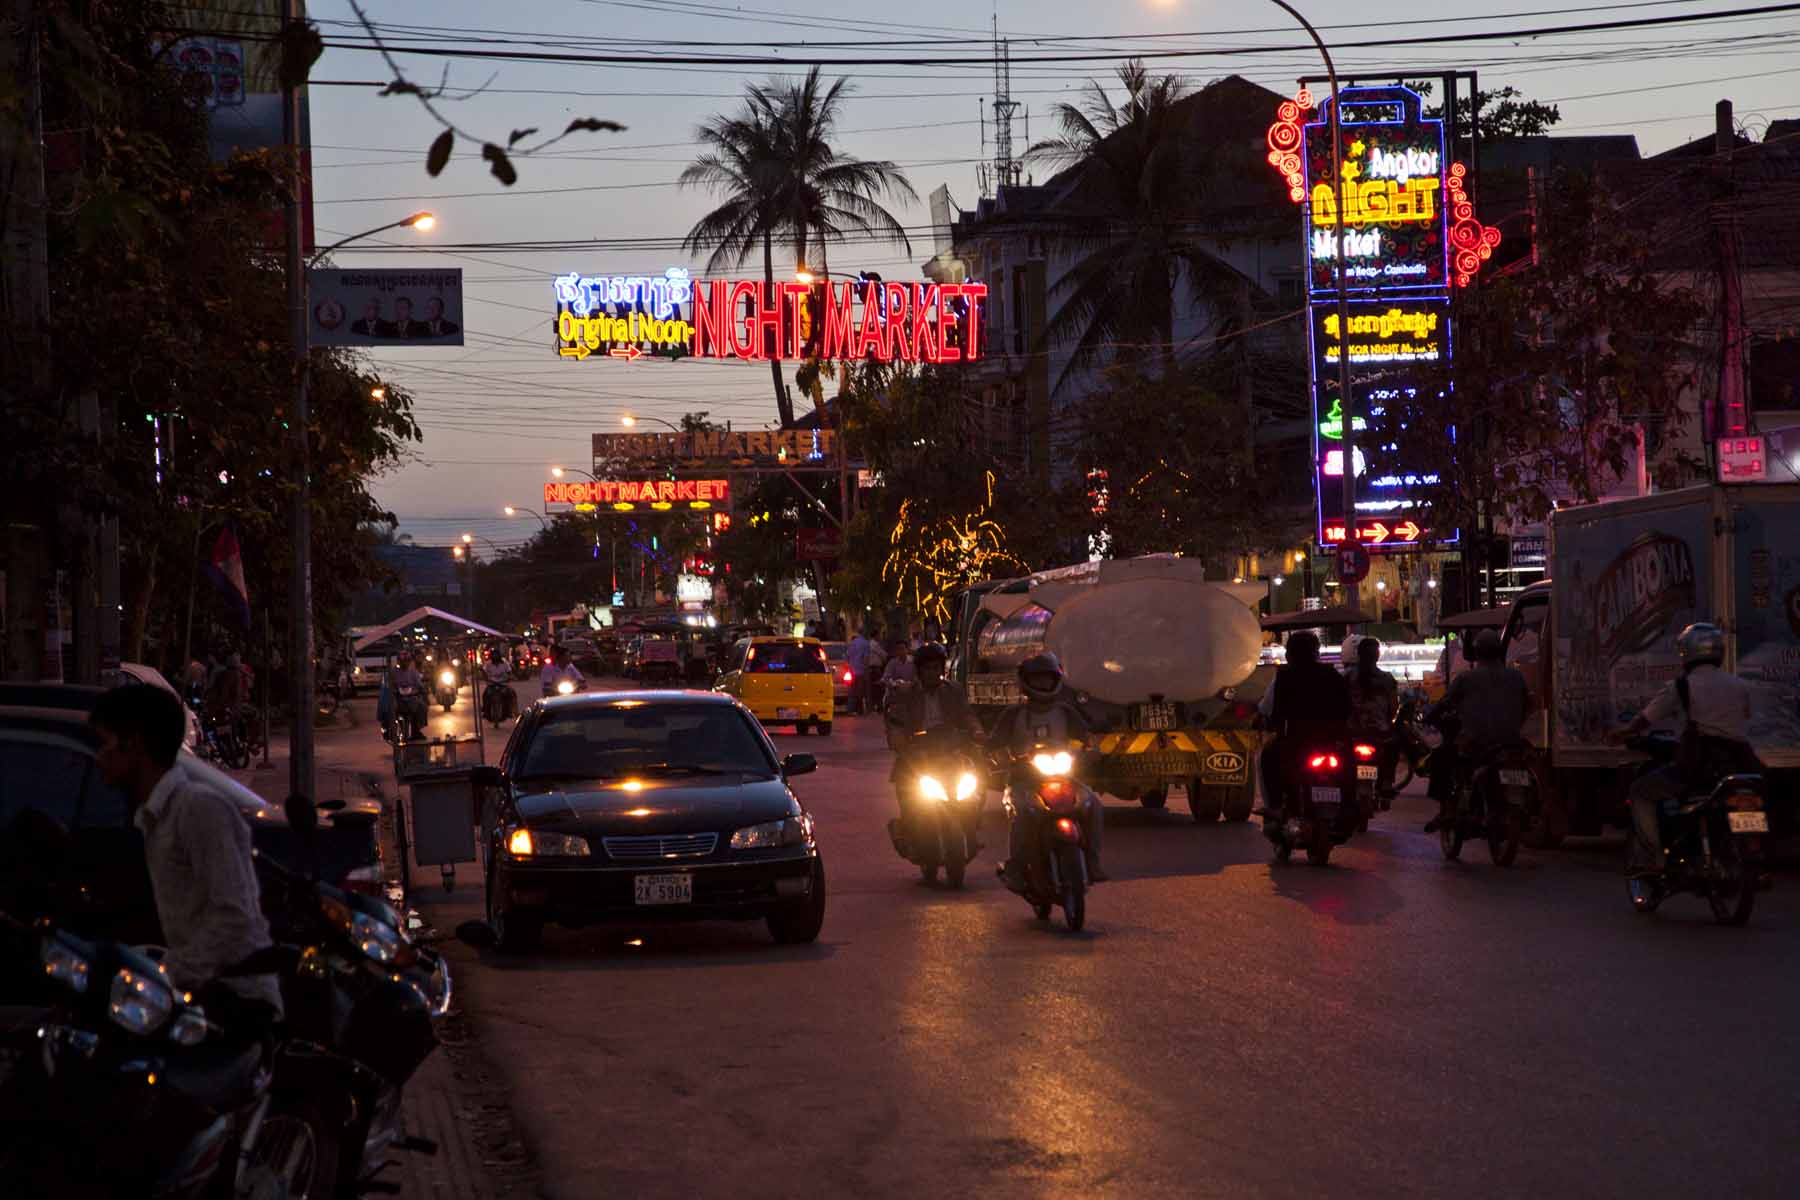 Siem Reap at night